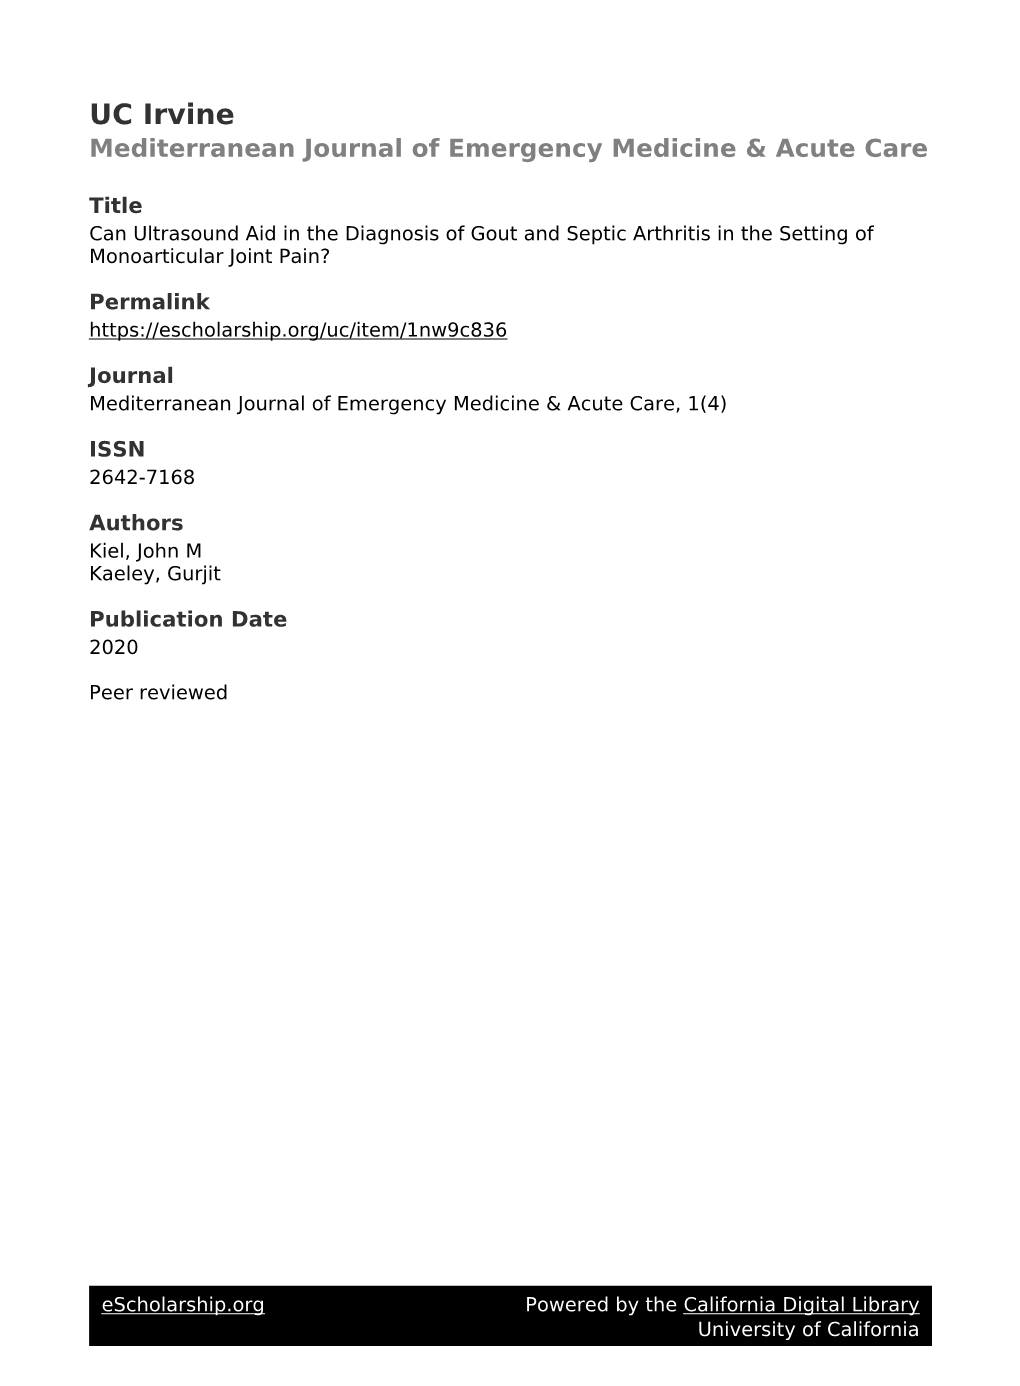 UC Irvine Mediterranean Journal of Emergency Medicine & Acute Care